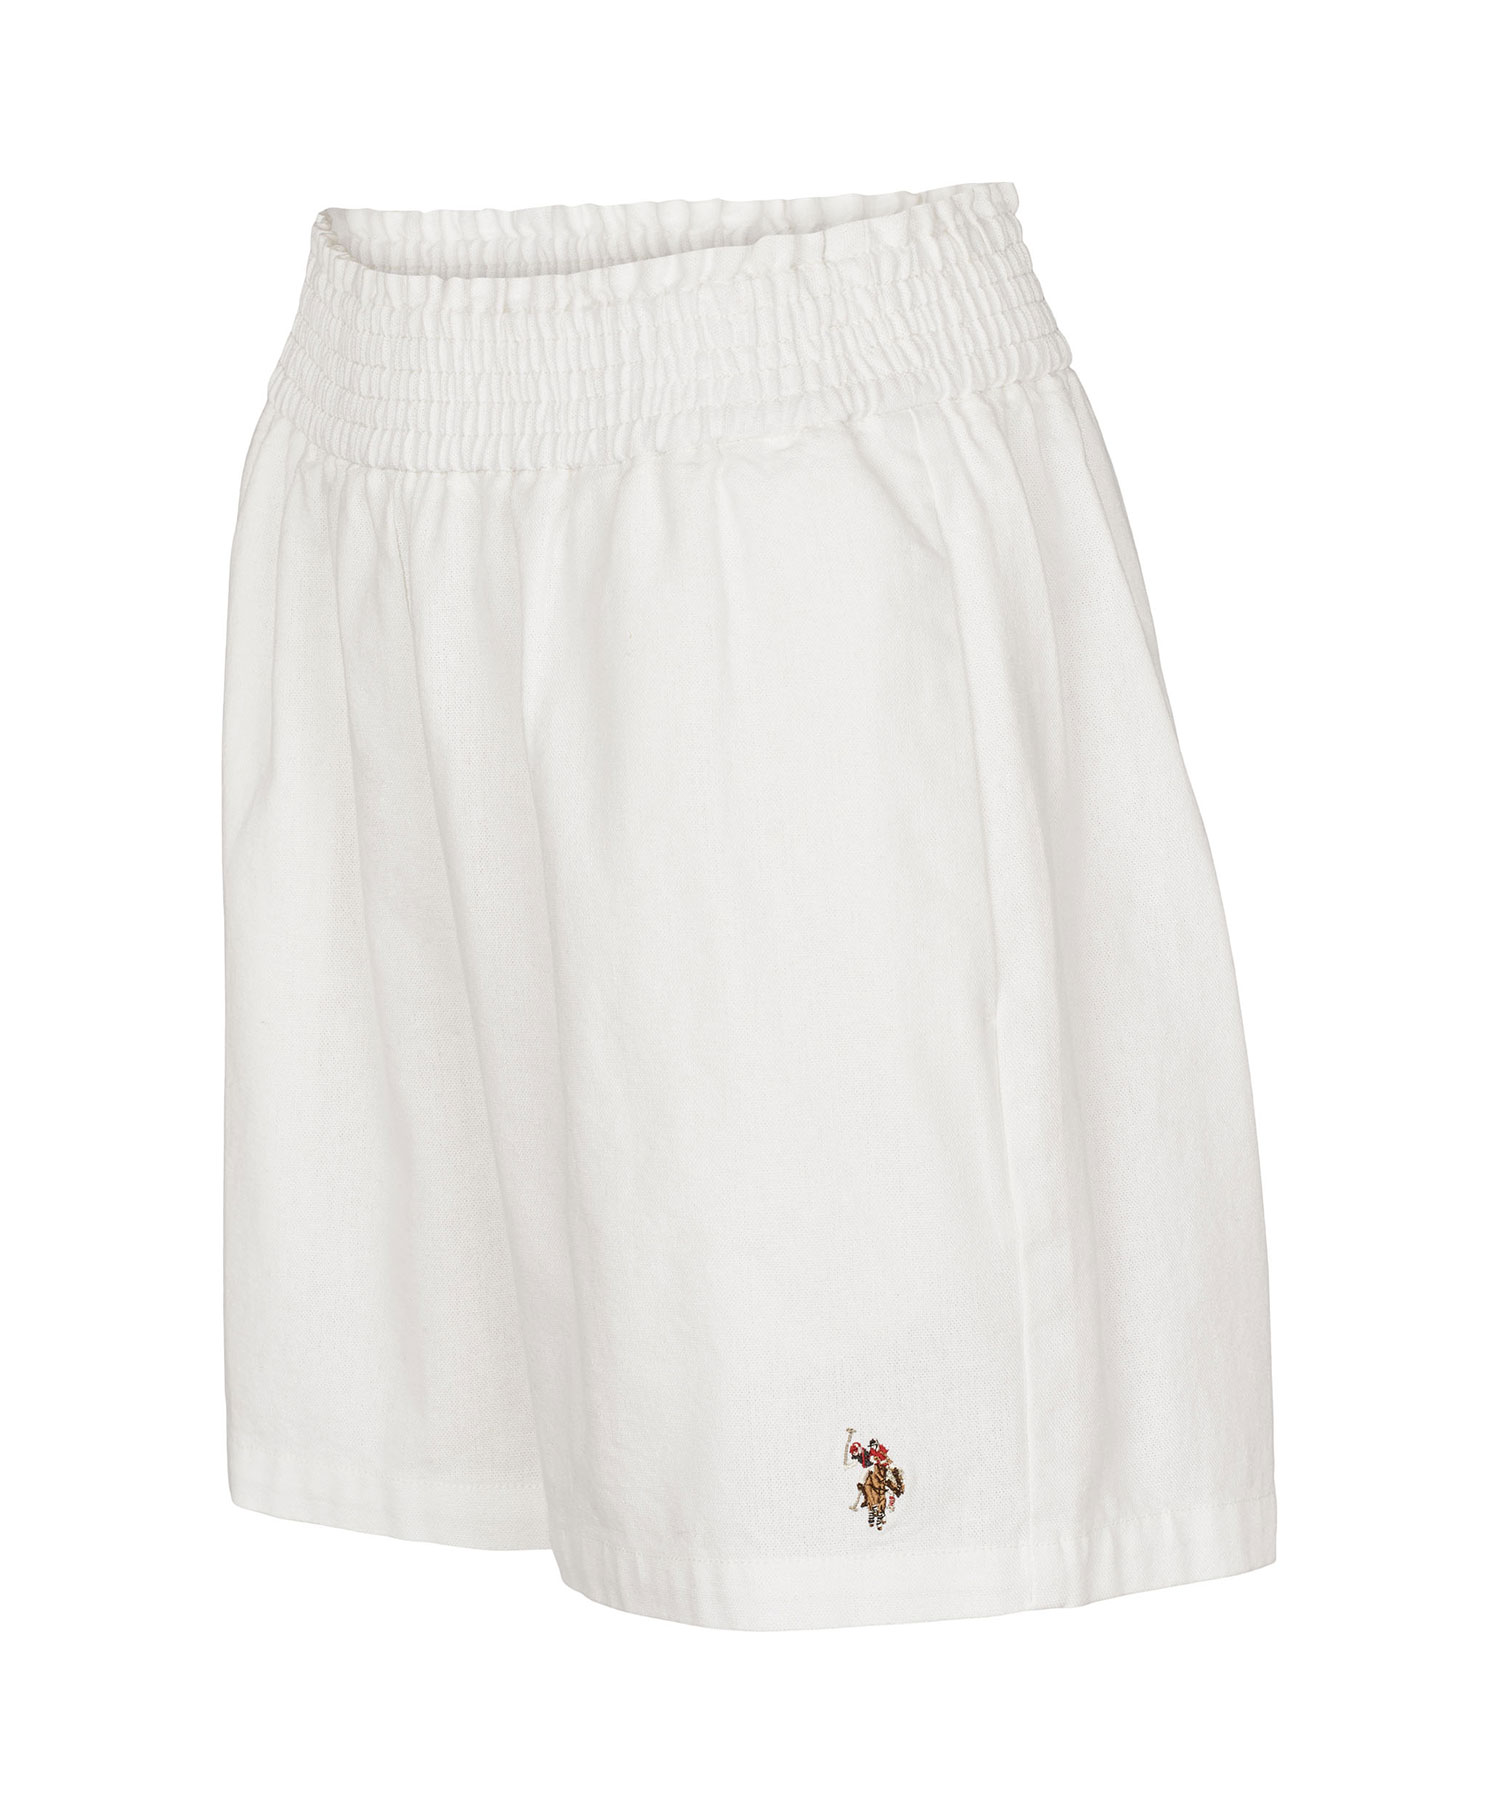 U.S Polo Cornelia Paperbag Shorts